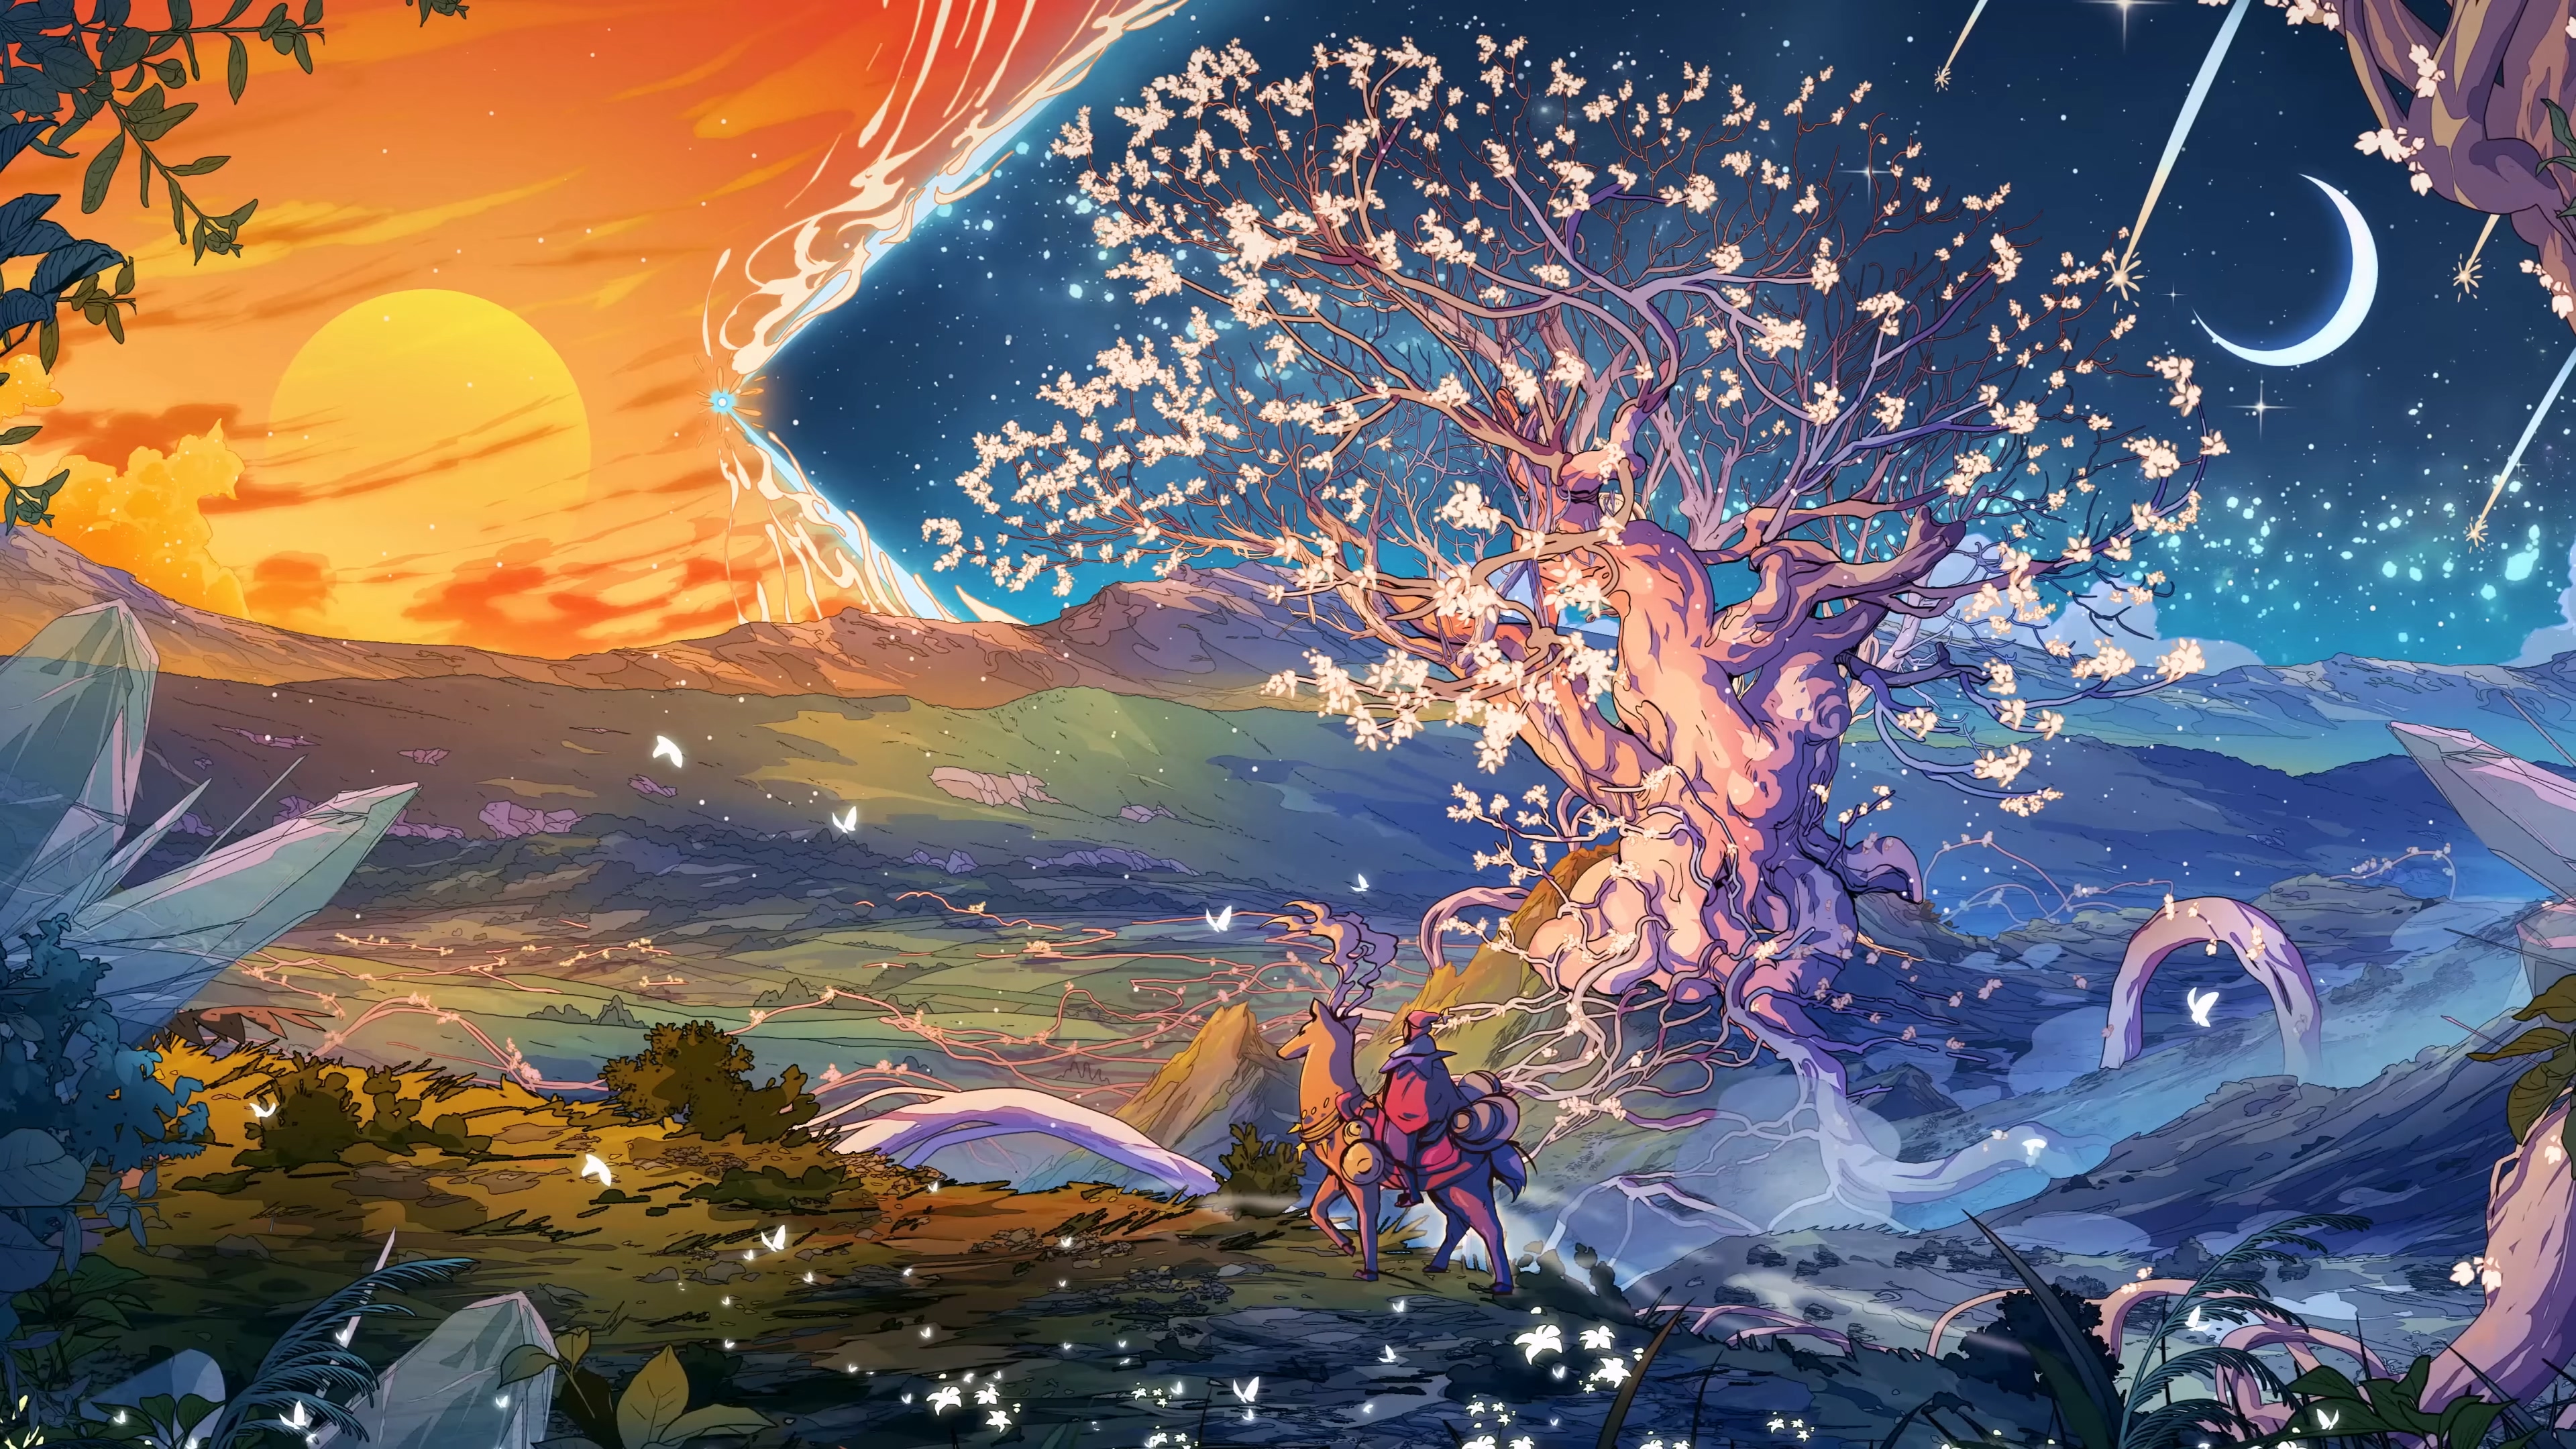 General 3840x2160 digital art artwork illustration landscape Christian Benavides 4K colorful fantasy art trees Moon Sun nature stars animals birds